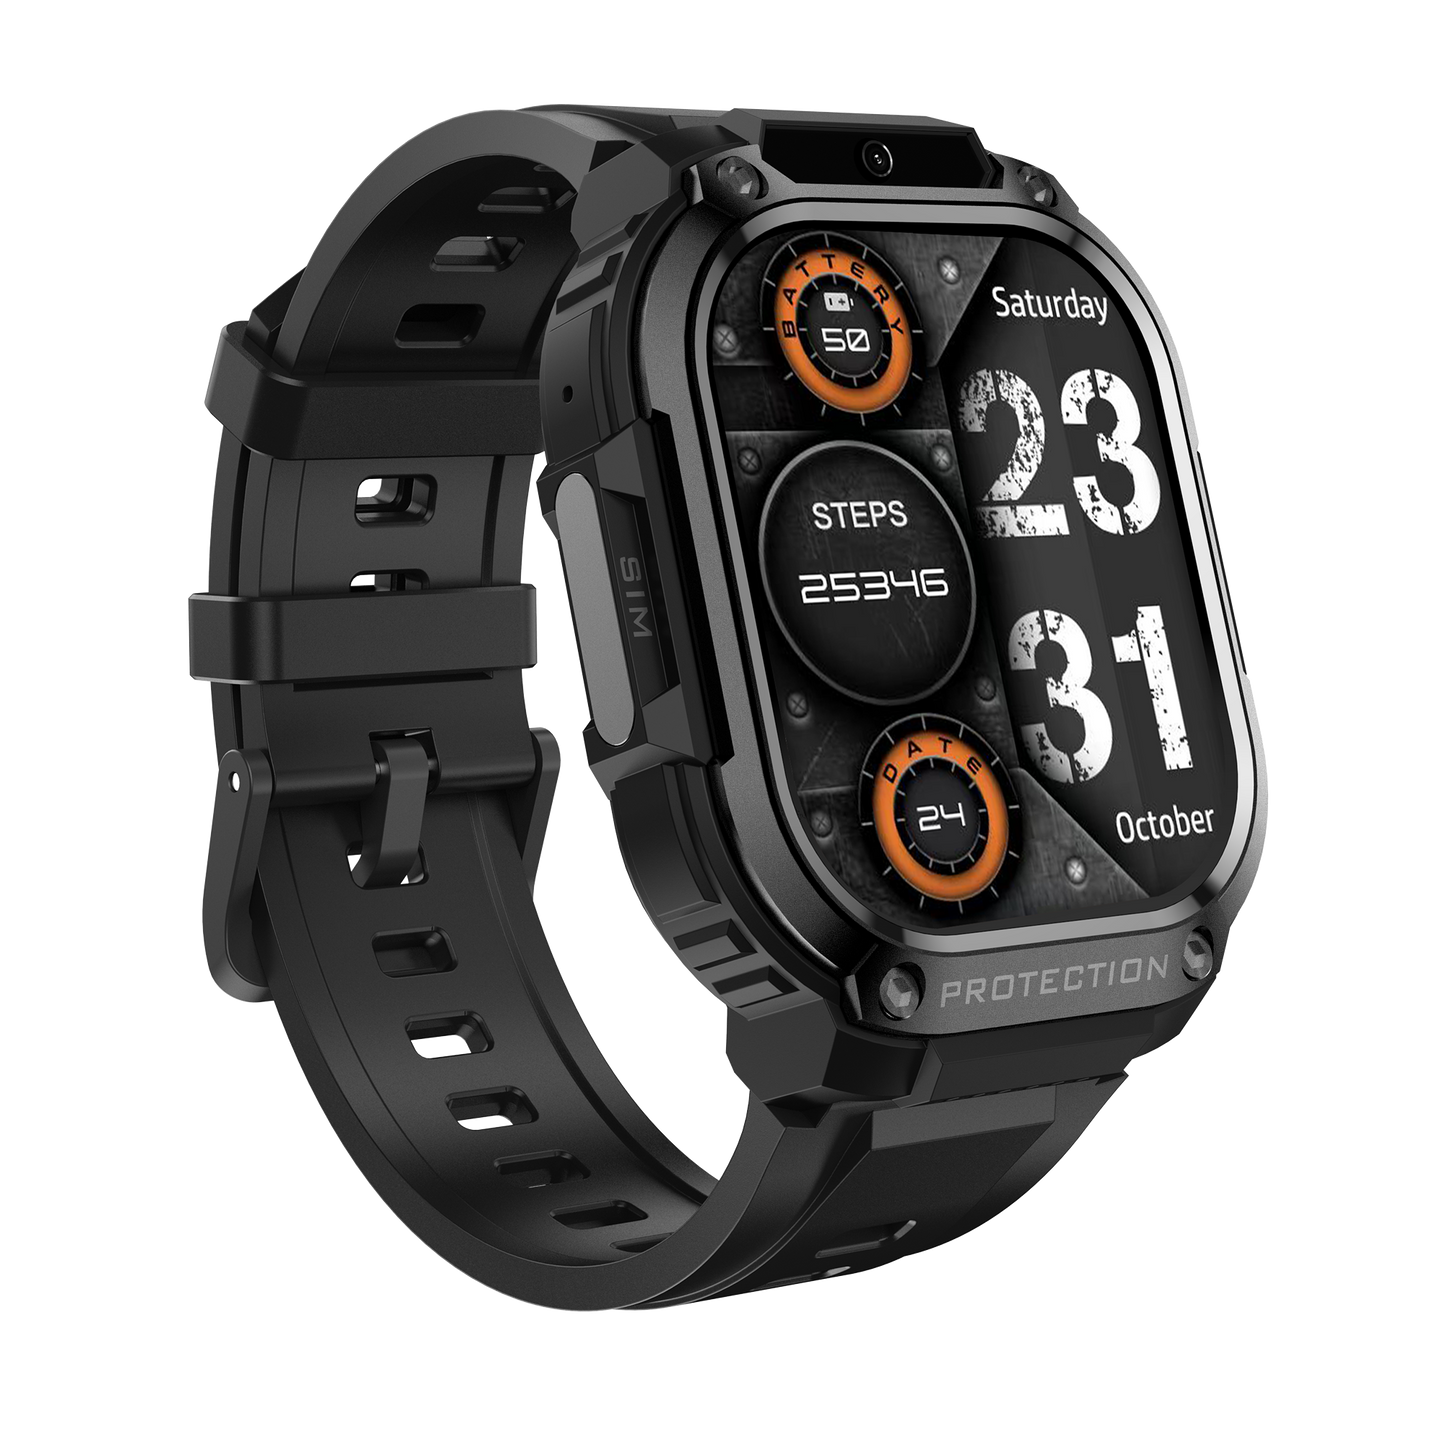 Rollme  Hero A 4G LTE smart watch phone 2+16 GB